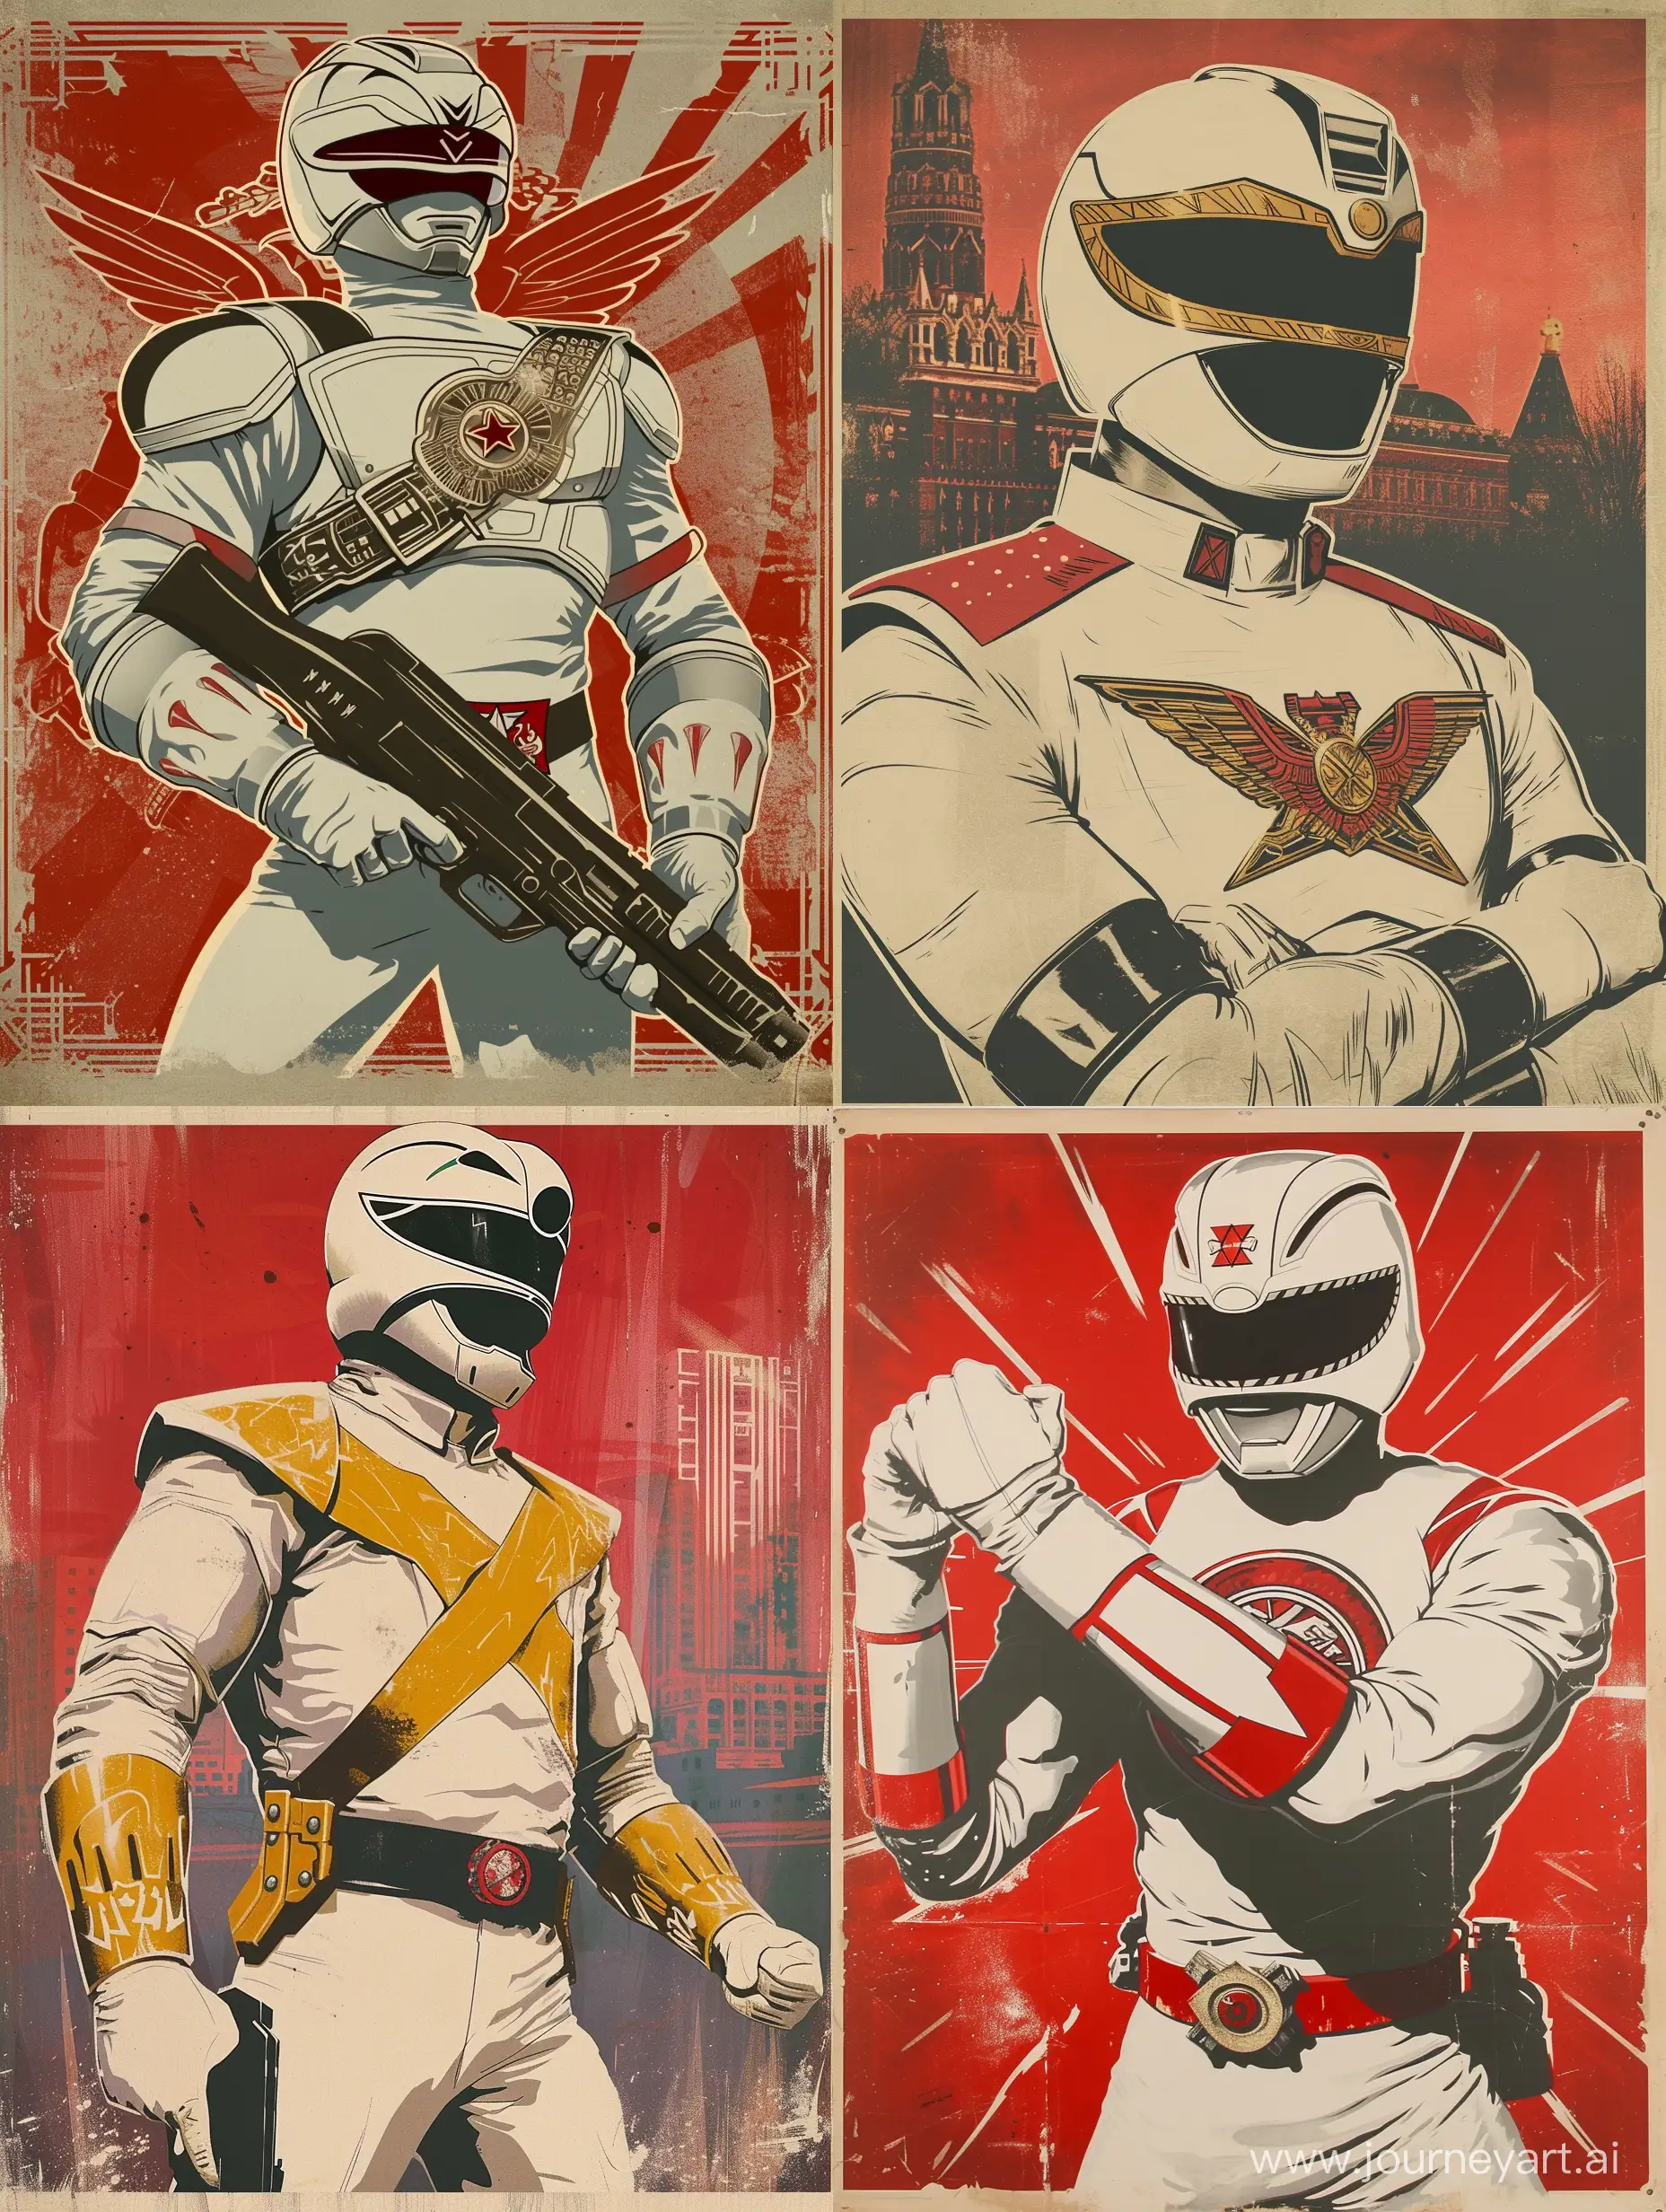 White-Power-Ranger-in-Communist-Russian-Propaganda-Style-Art